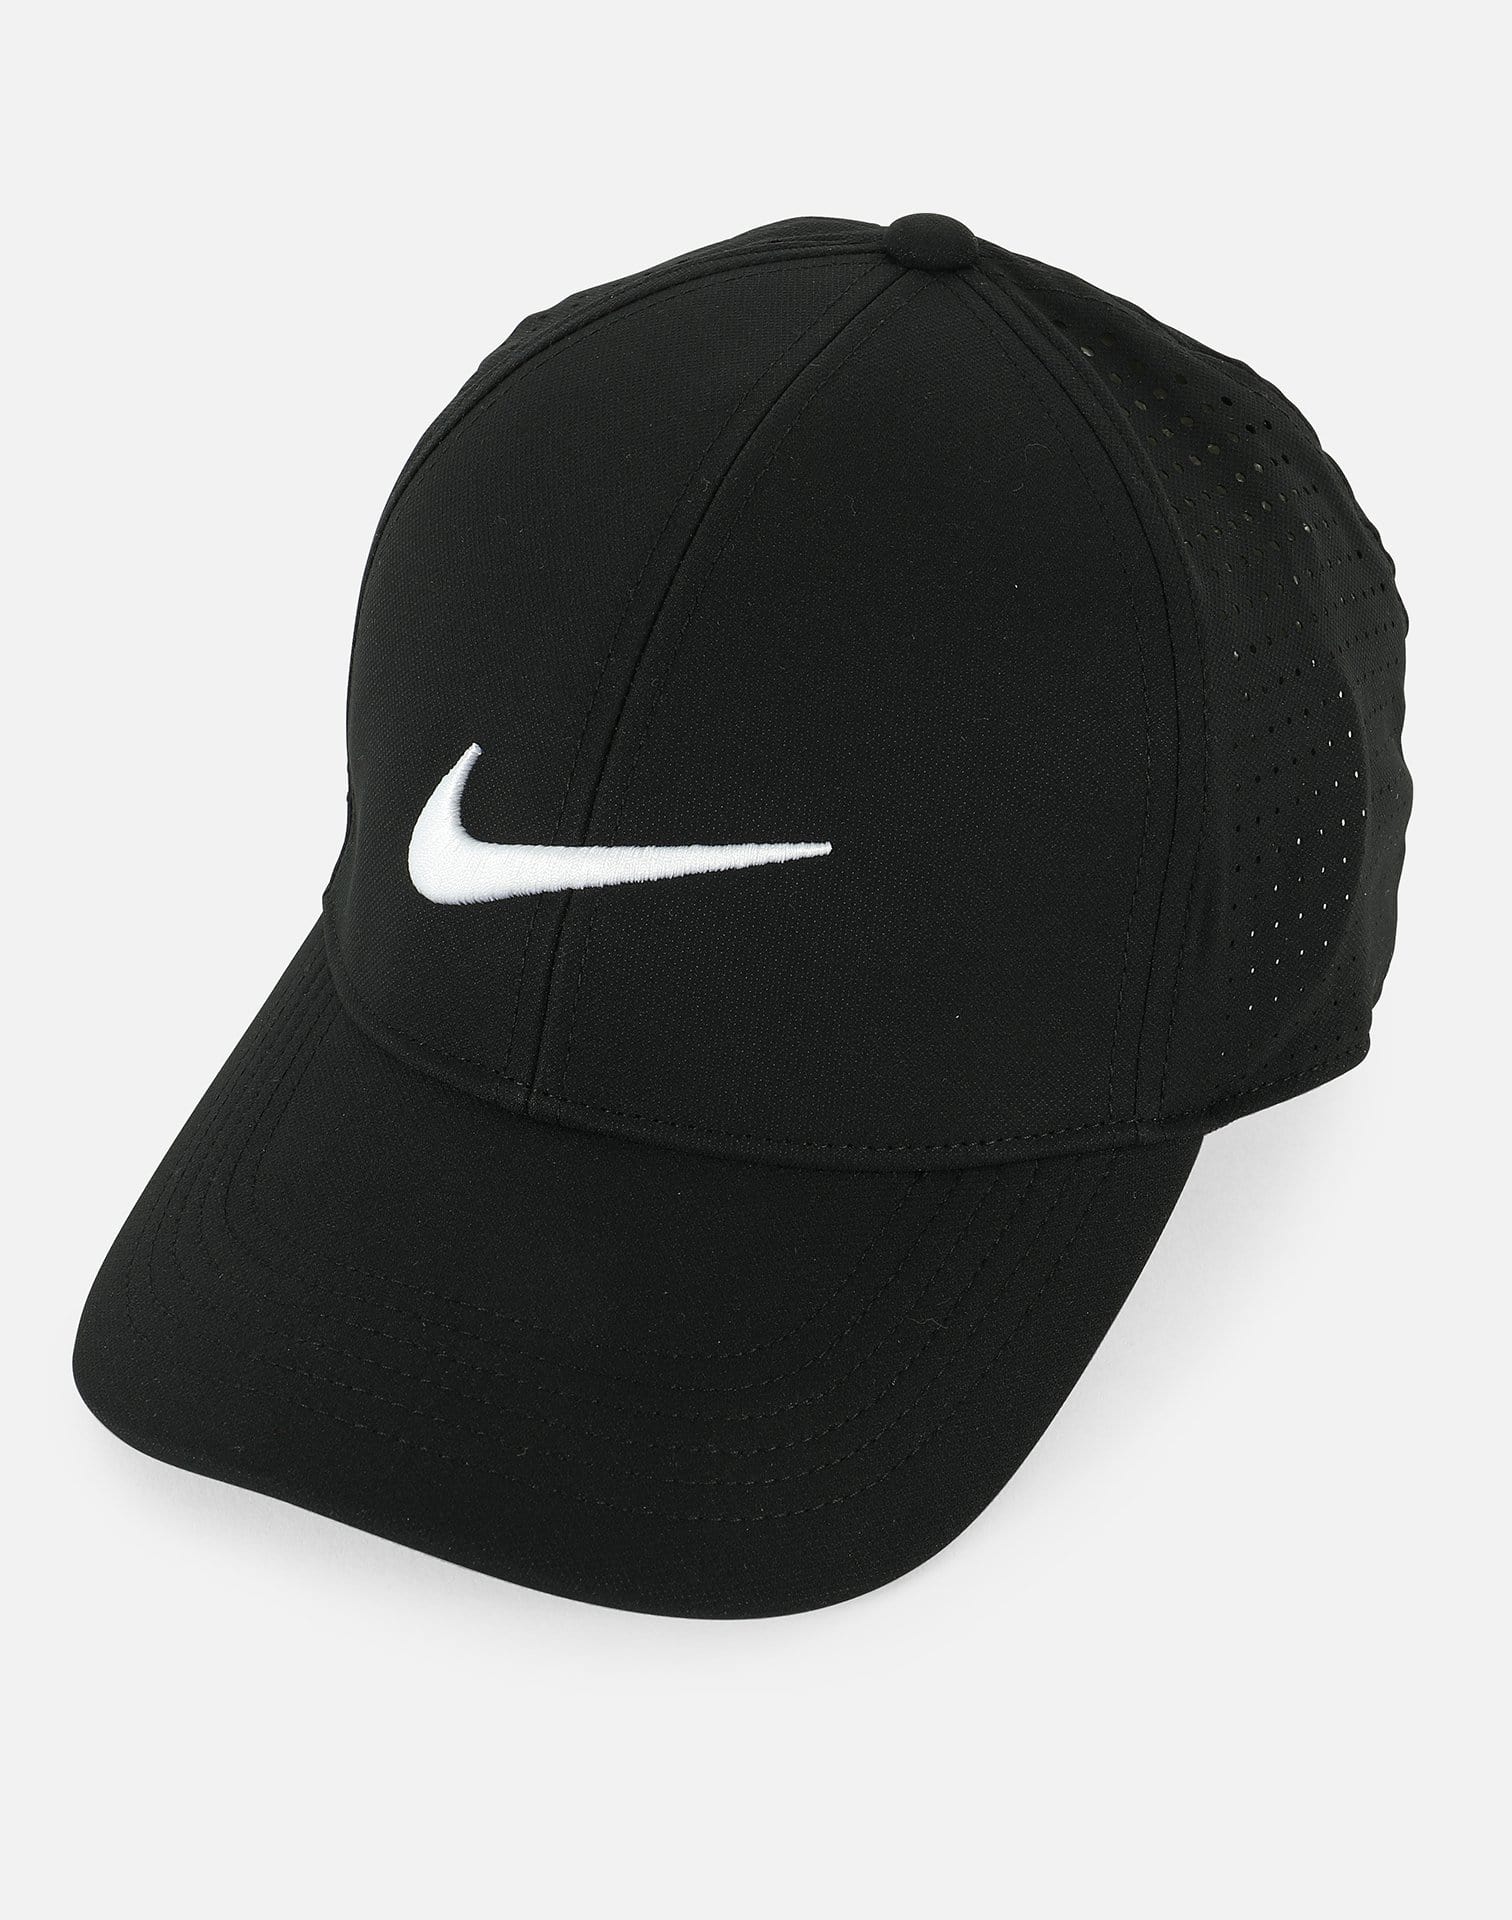 Nike Women's Aerobill Legacy91 Golf Hat